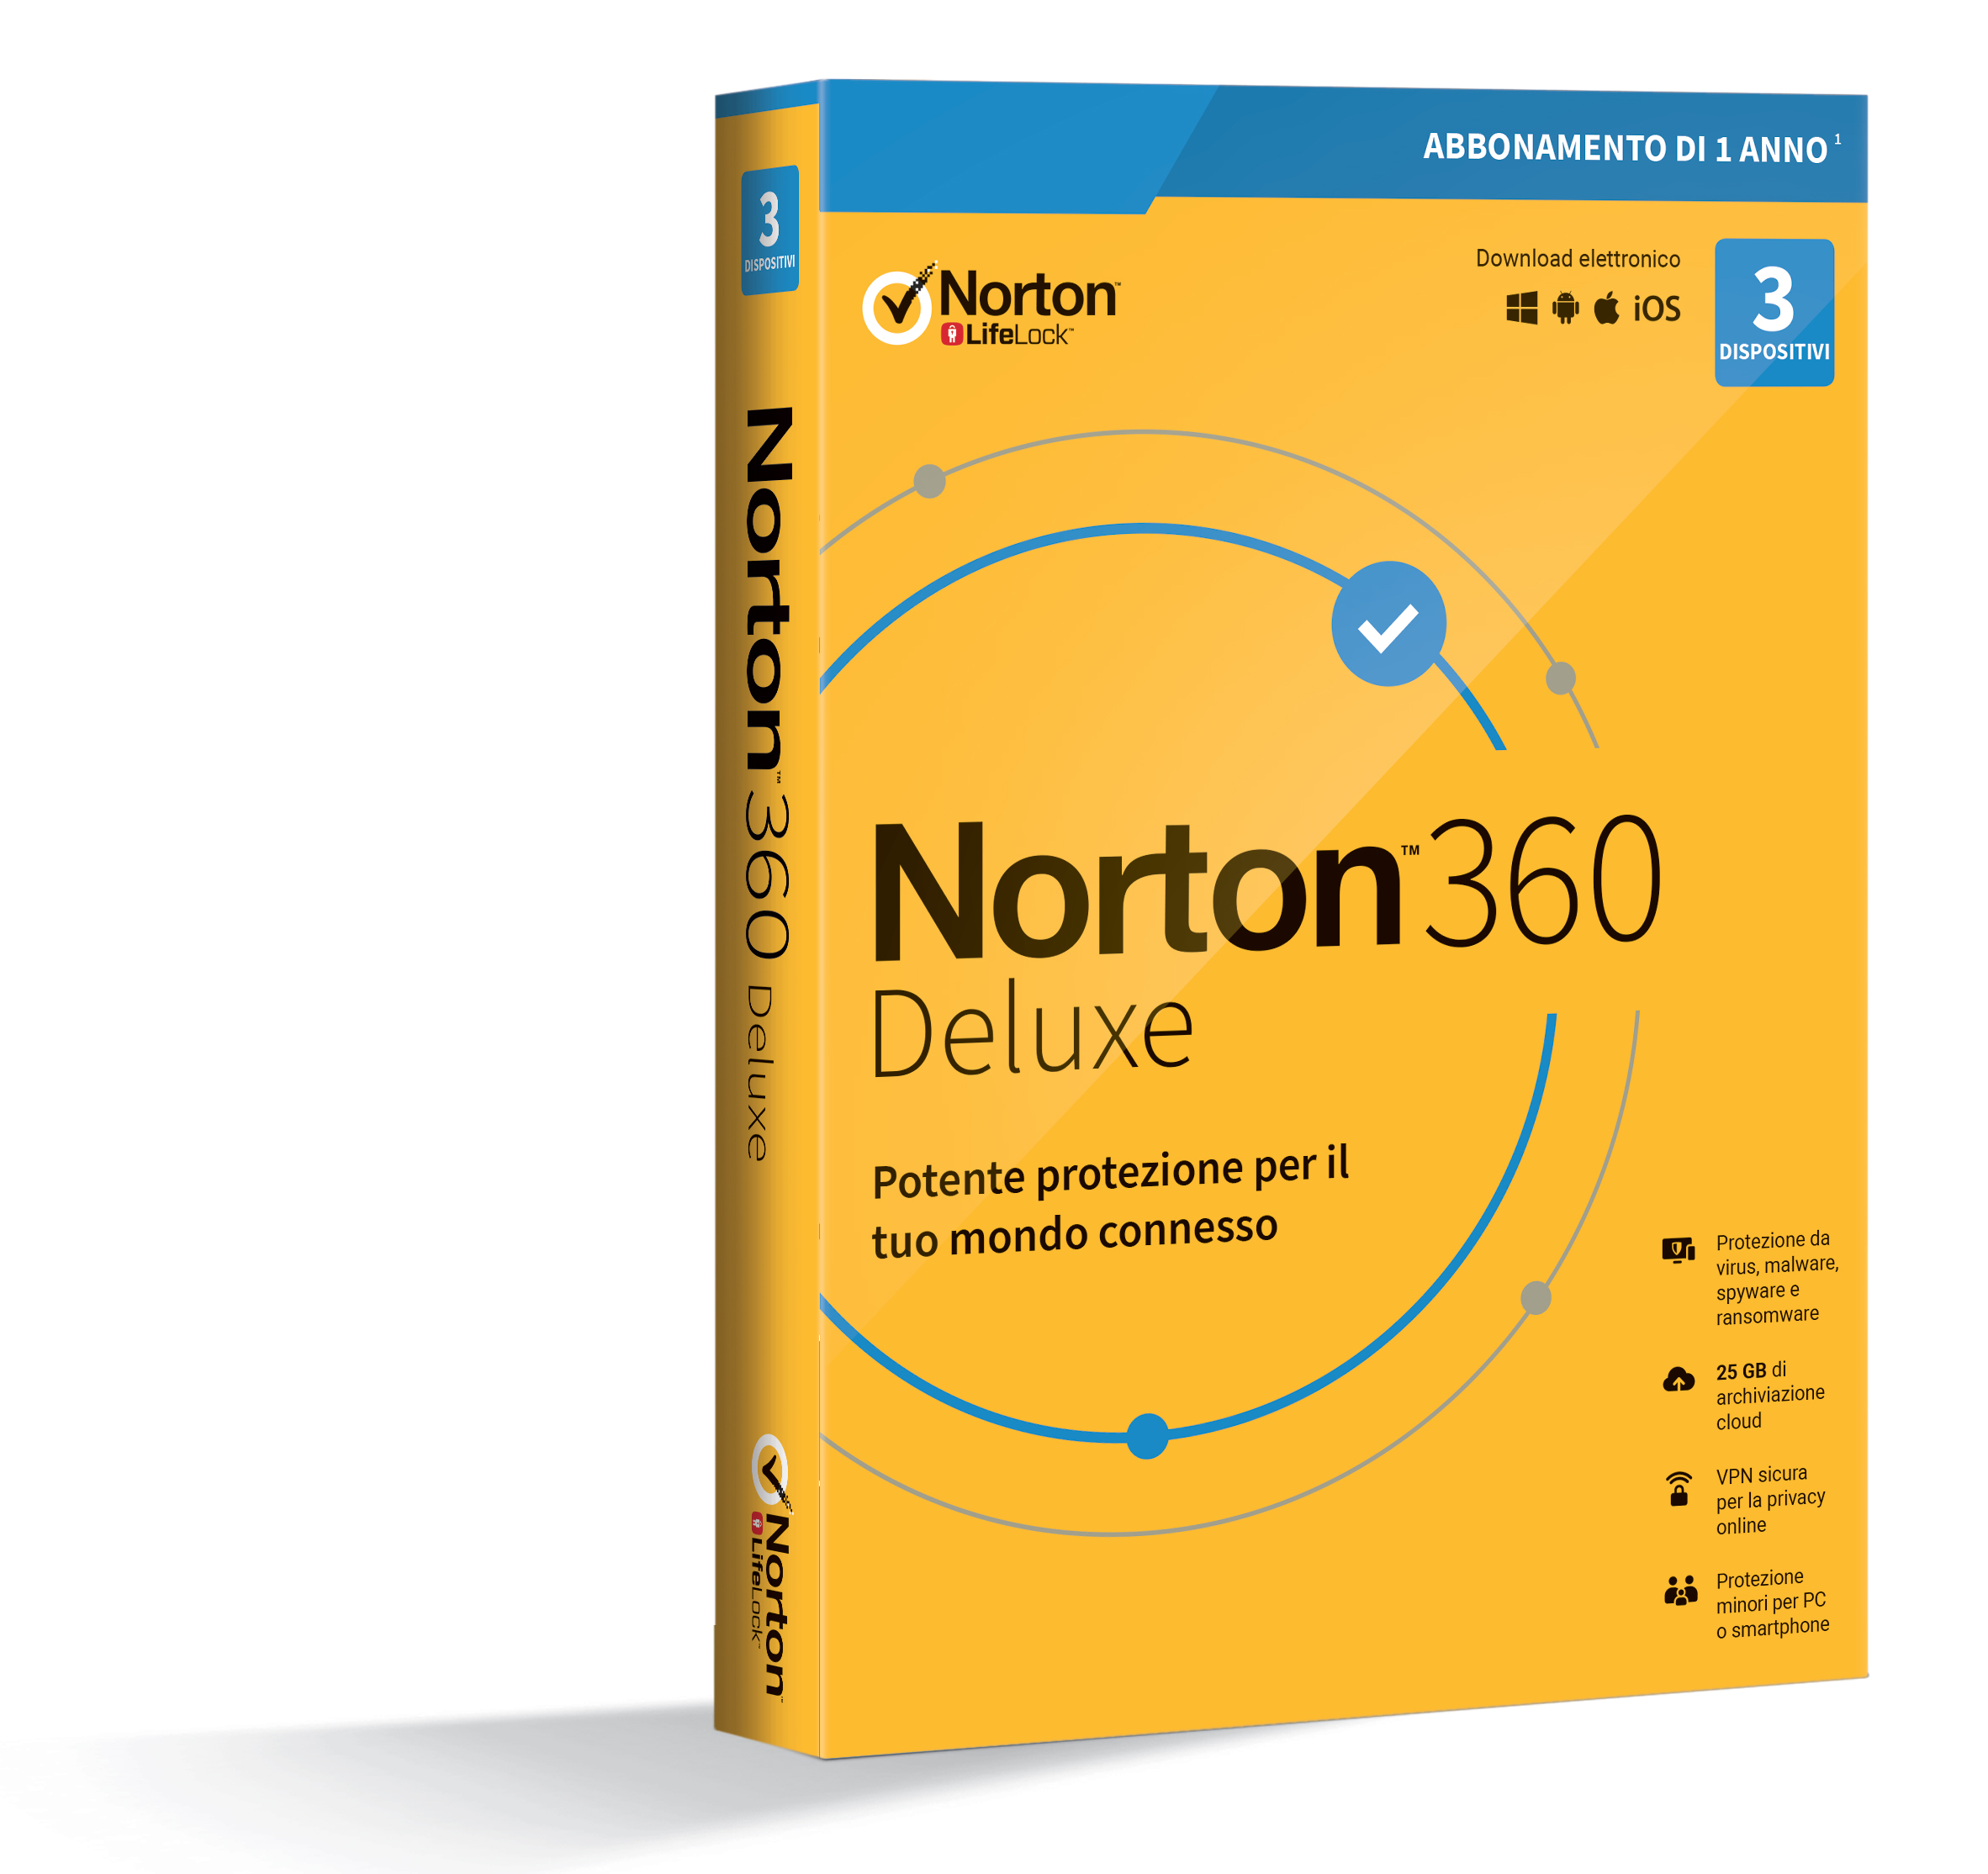 SYMANTEC NORTON 360 DELUXE 2020 3 DISPOSITIVI 12 MESI 25GB